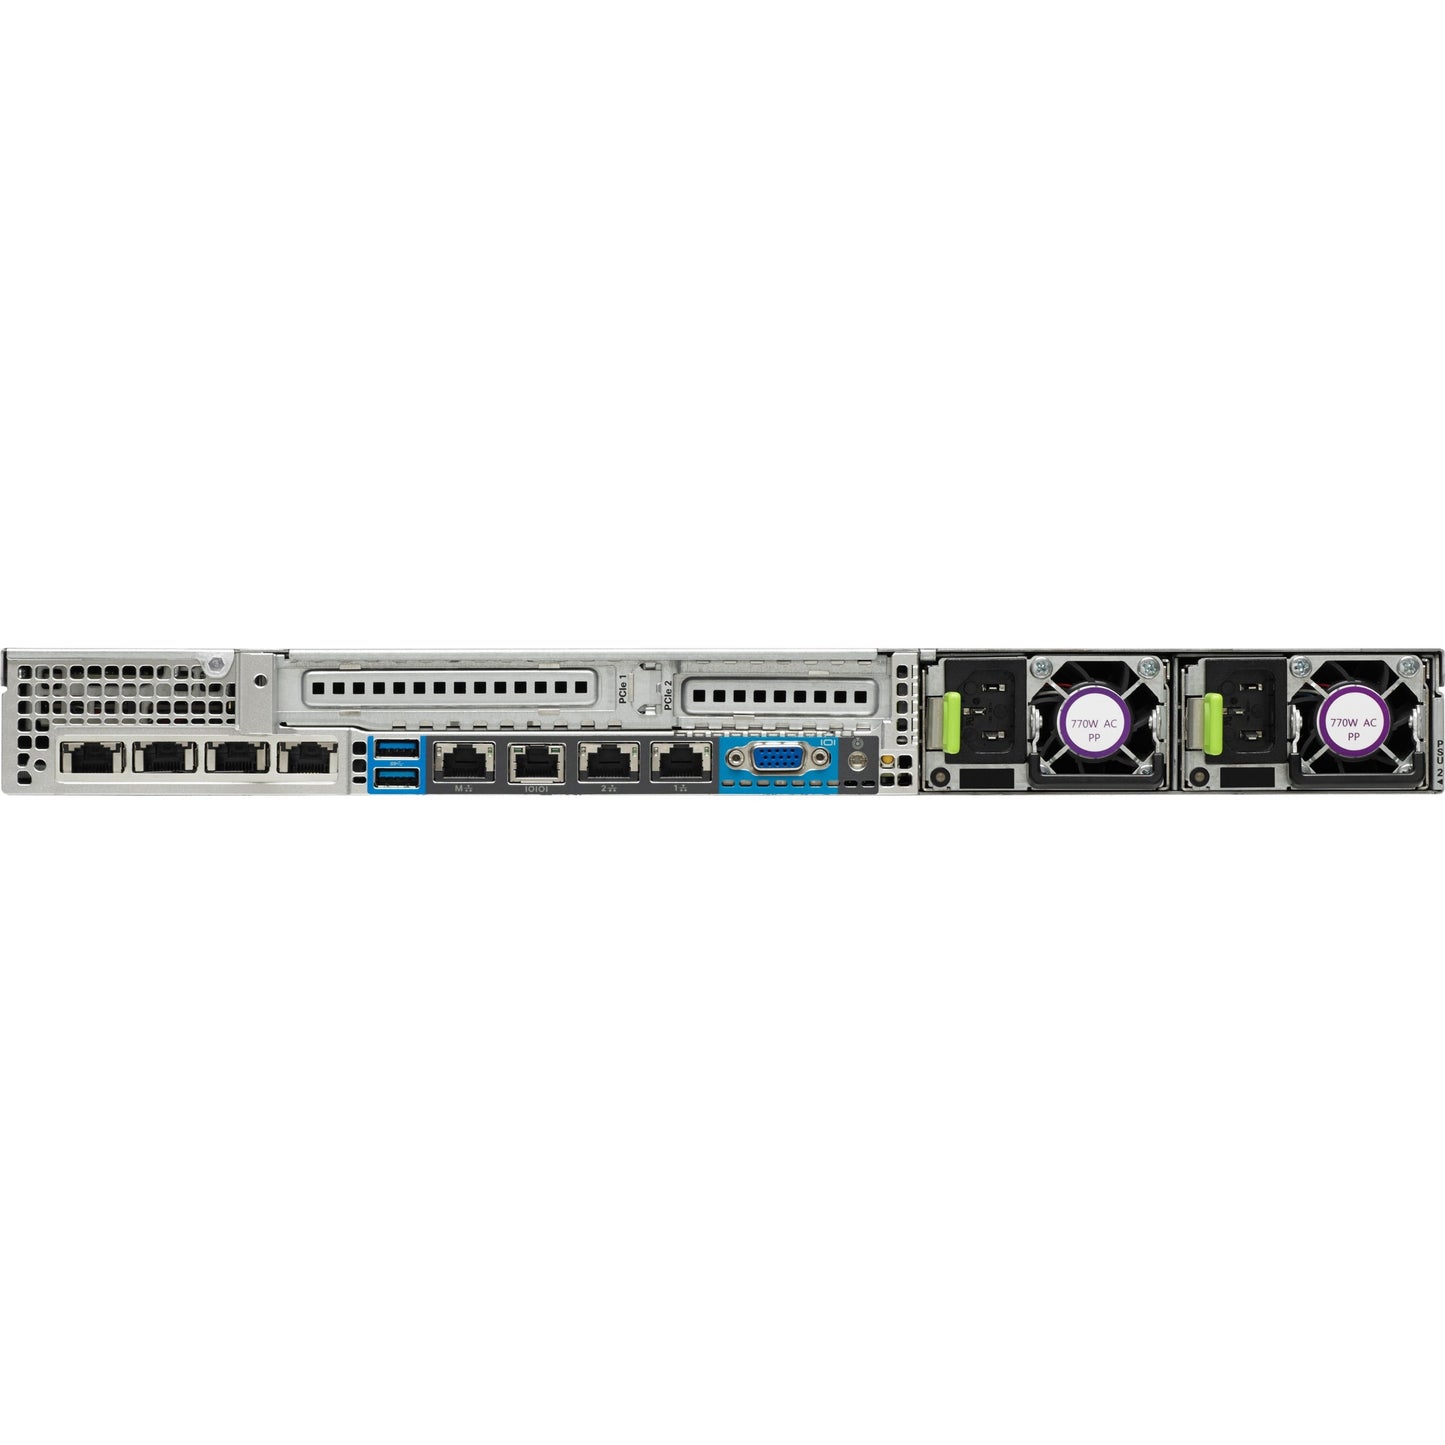 Cisco C220 M4 Rack Server - 2 x Intel Xeon E5-2670 v3 2.30 GHz - 128 GB RAM - 12Gb/s SAS Serial ATA Controller